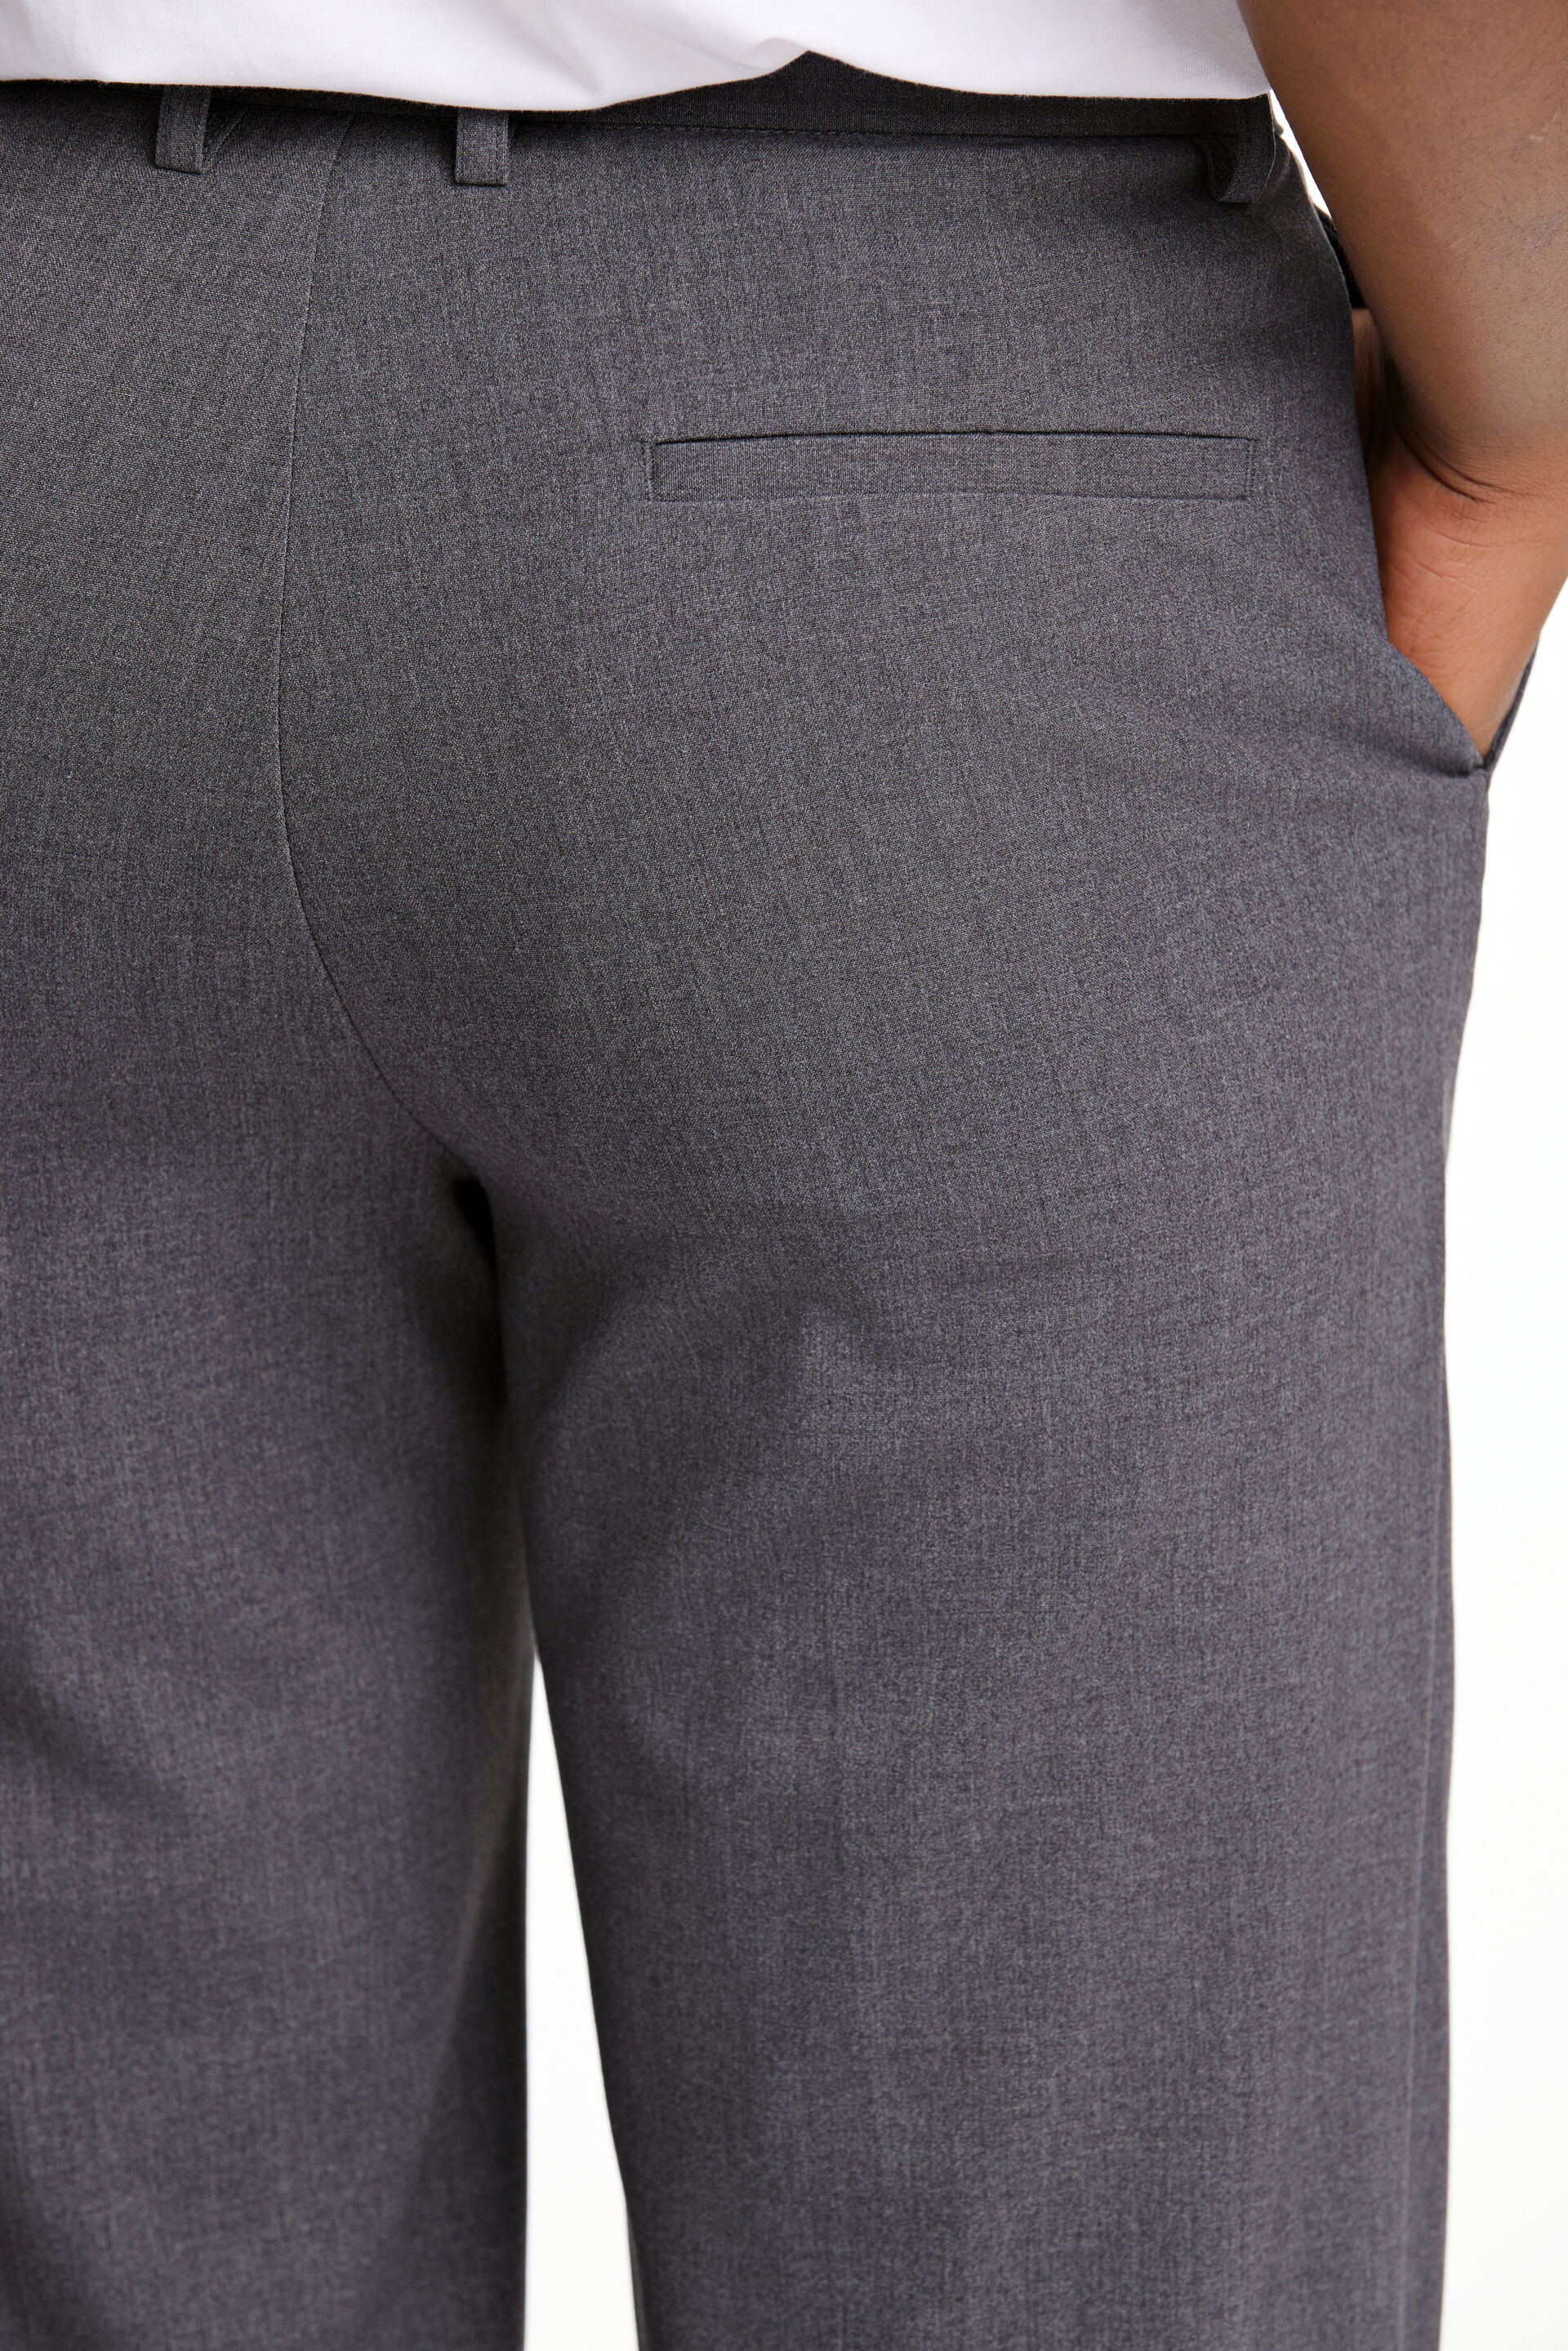 Classic trousers 30-01111